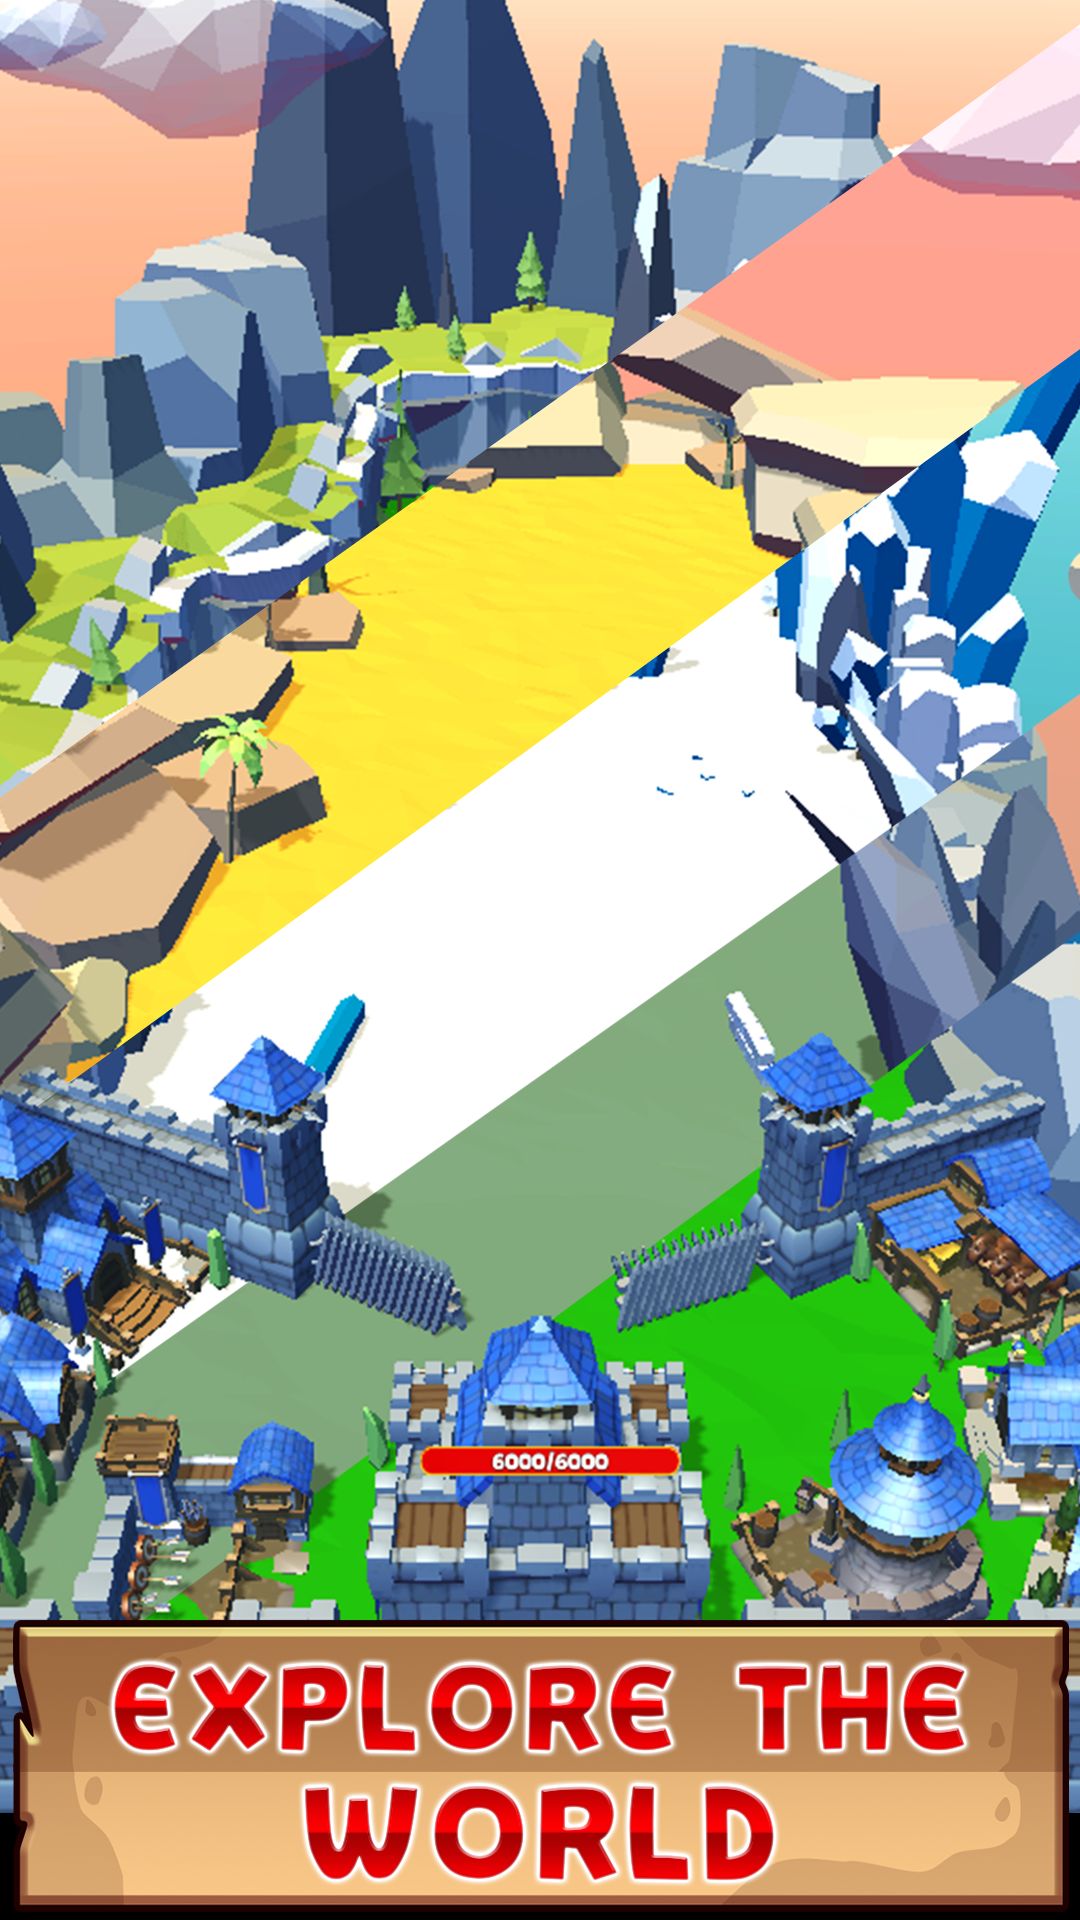 Pinball Kingdom: Tower Defense screenshot 1